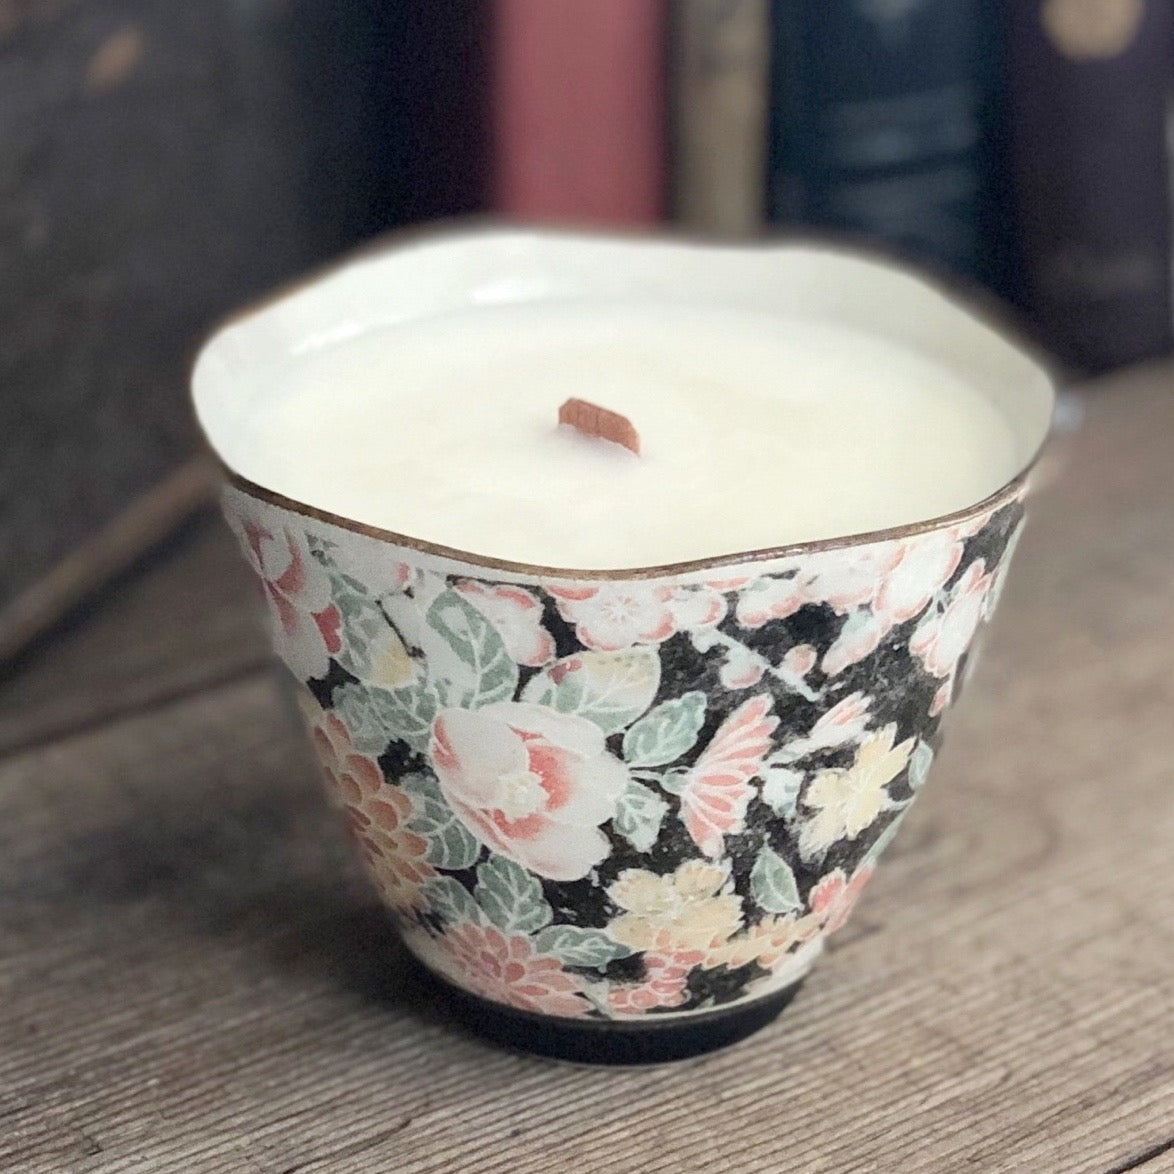 Aromatherapy Teacup Candle "Autumn"